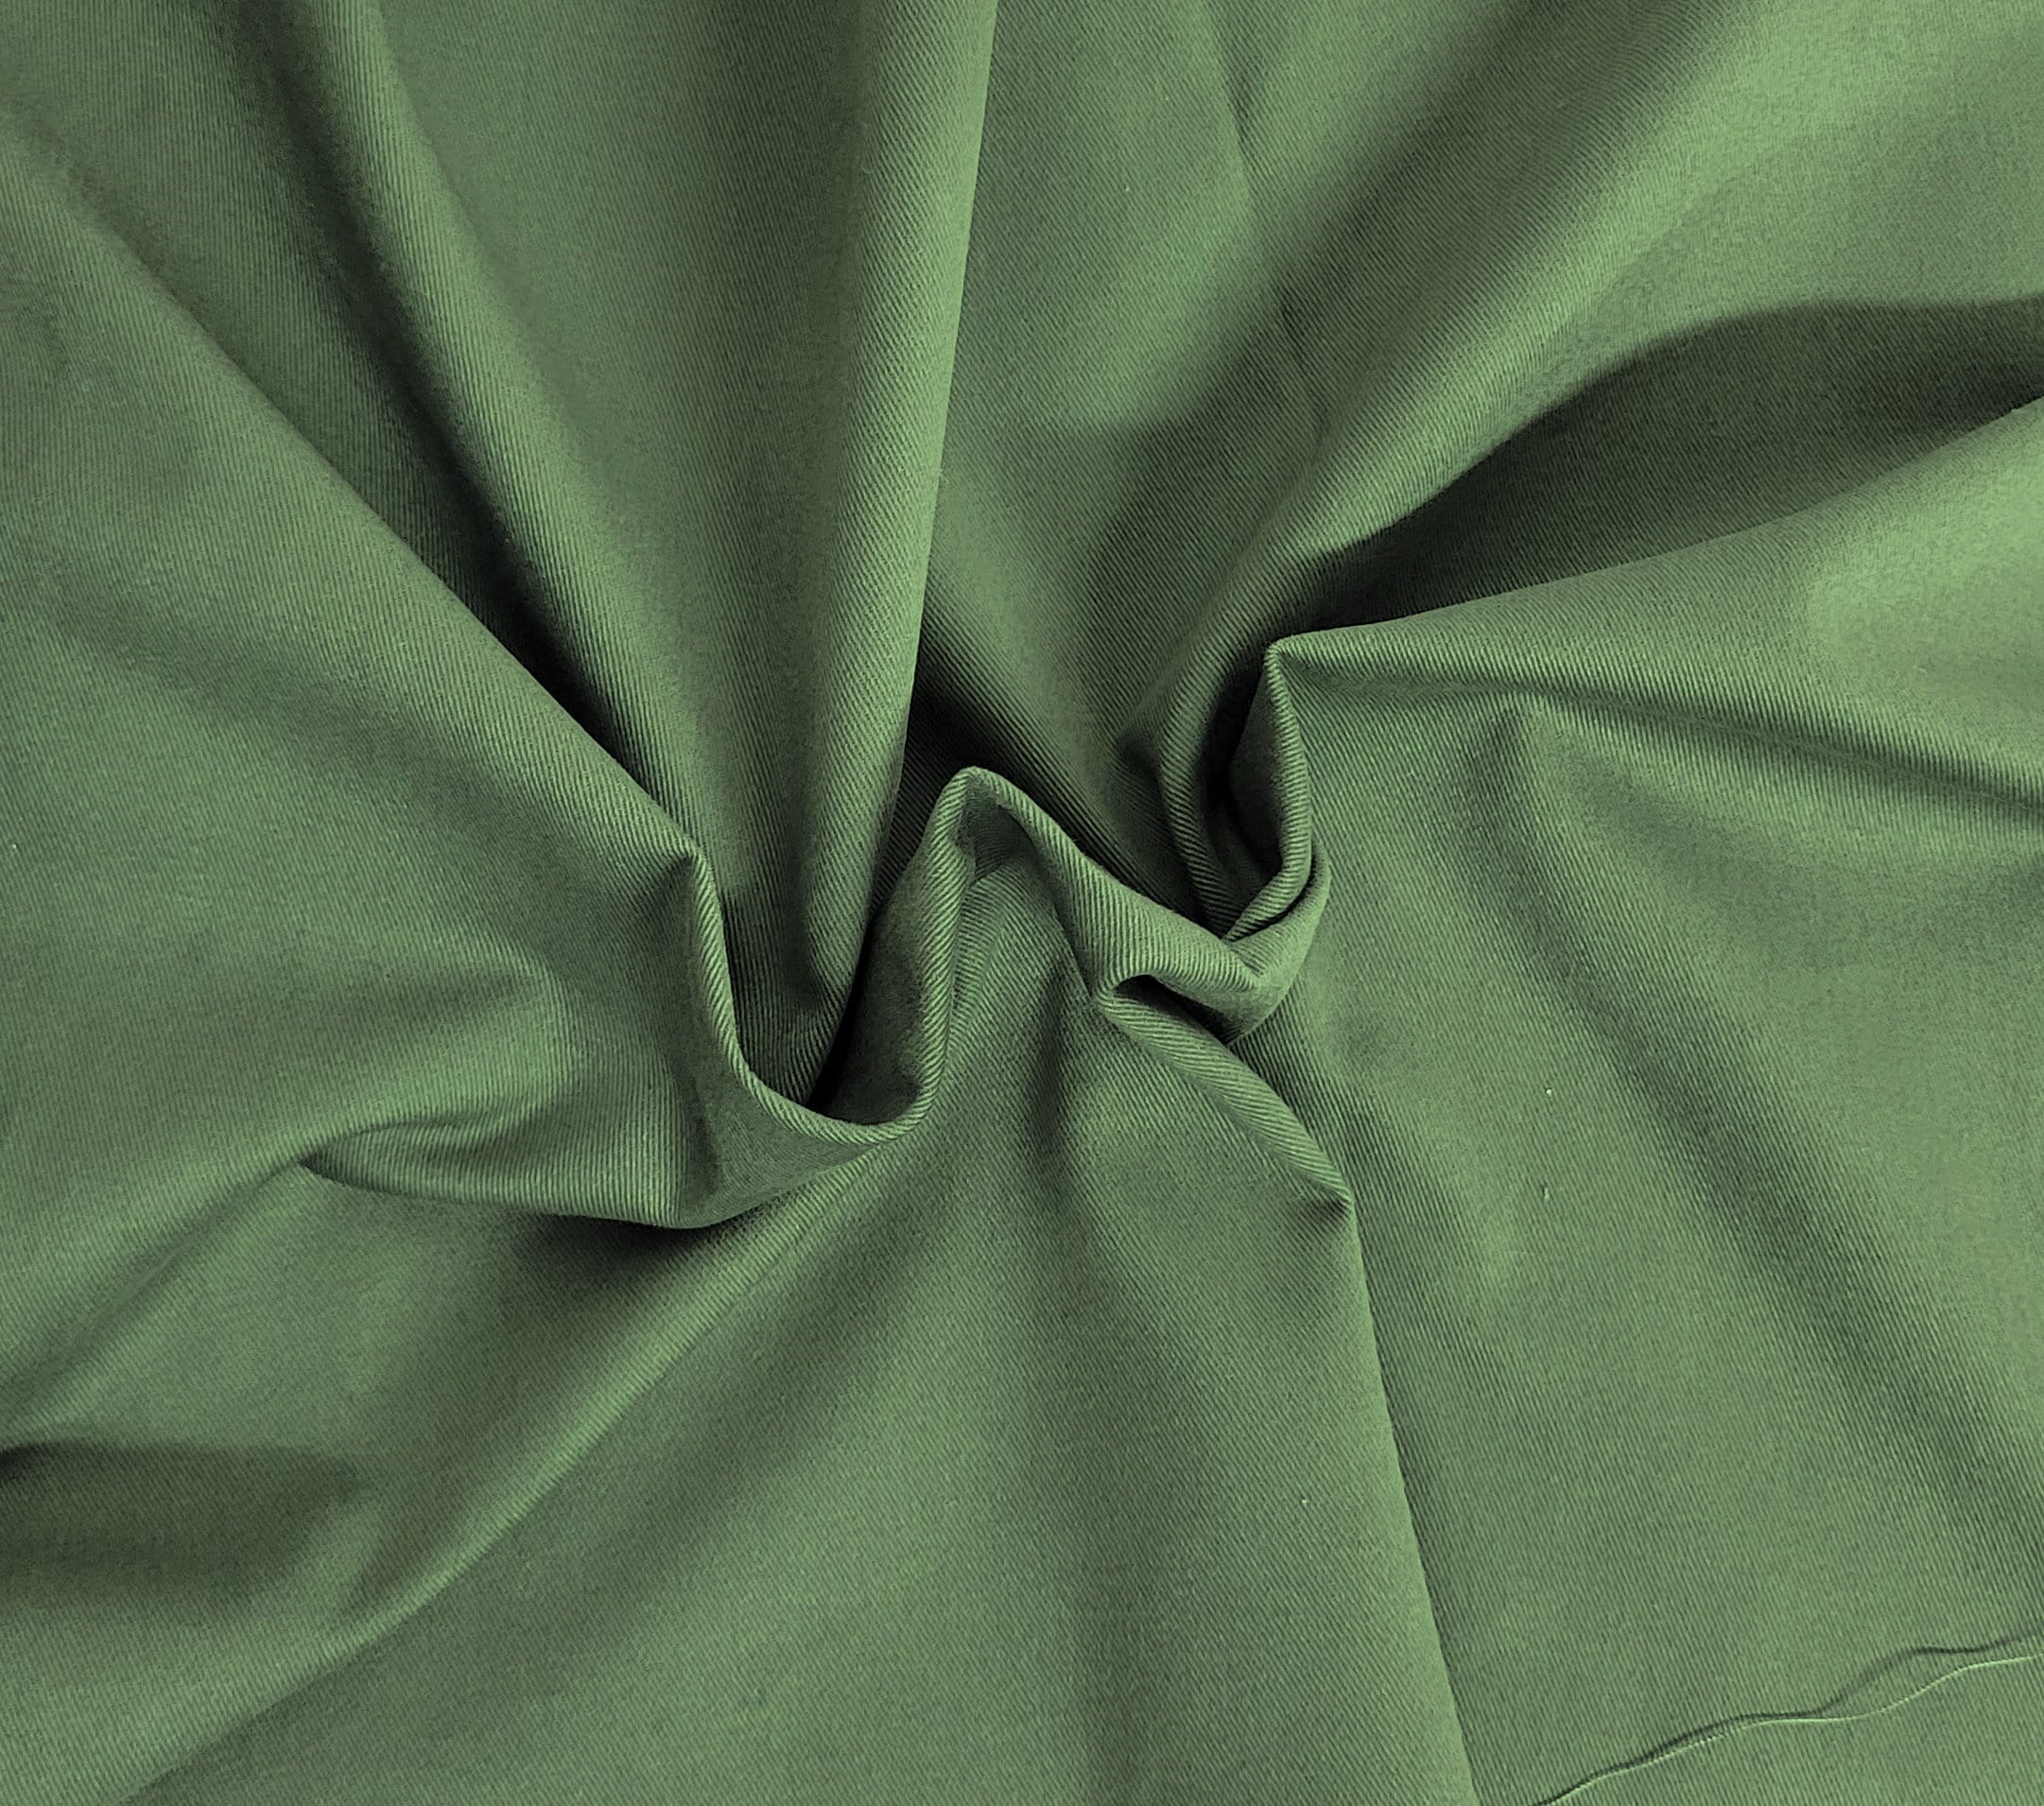 Ivy Green Cotton Twill Spandex Fabric 4 Way Stretch Fabric by the Yard 